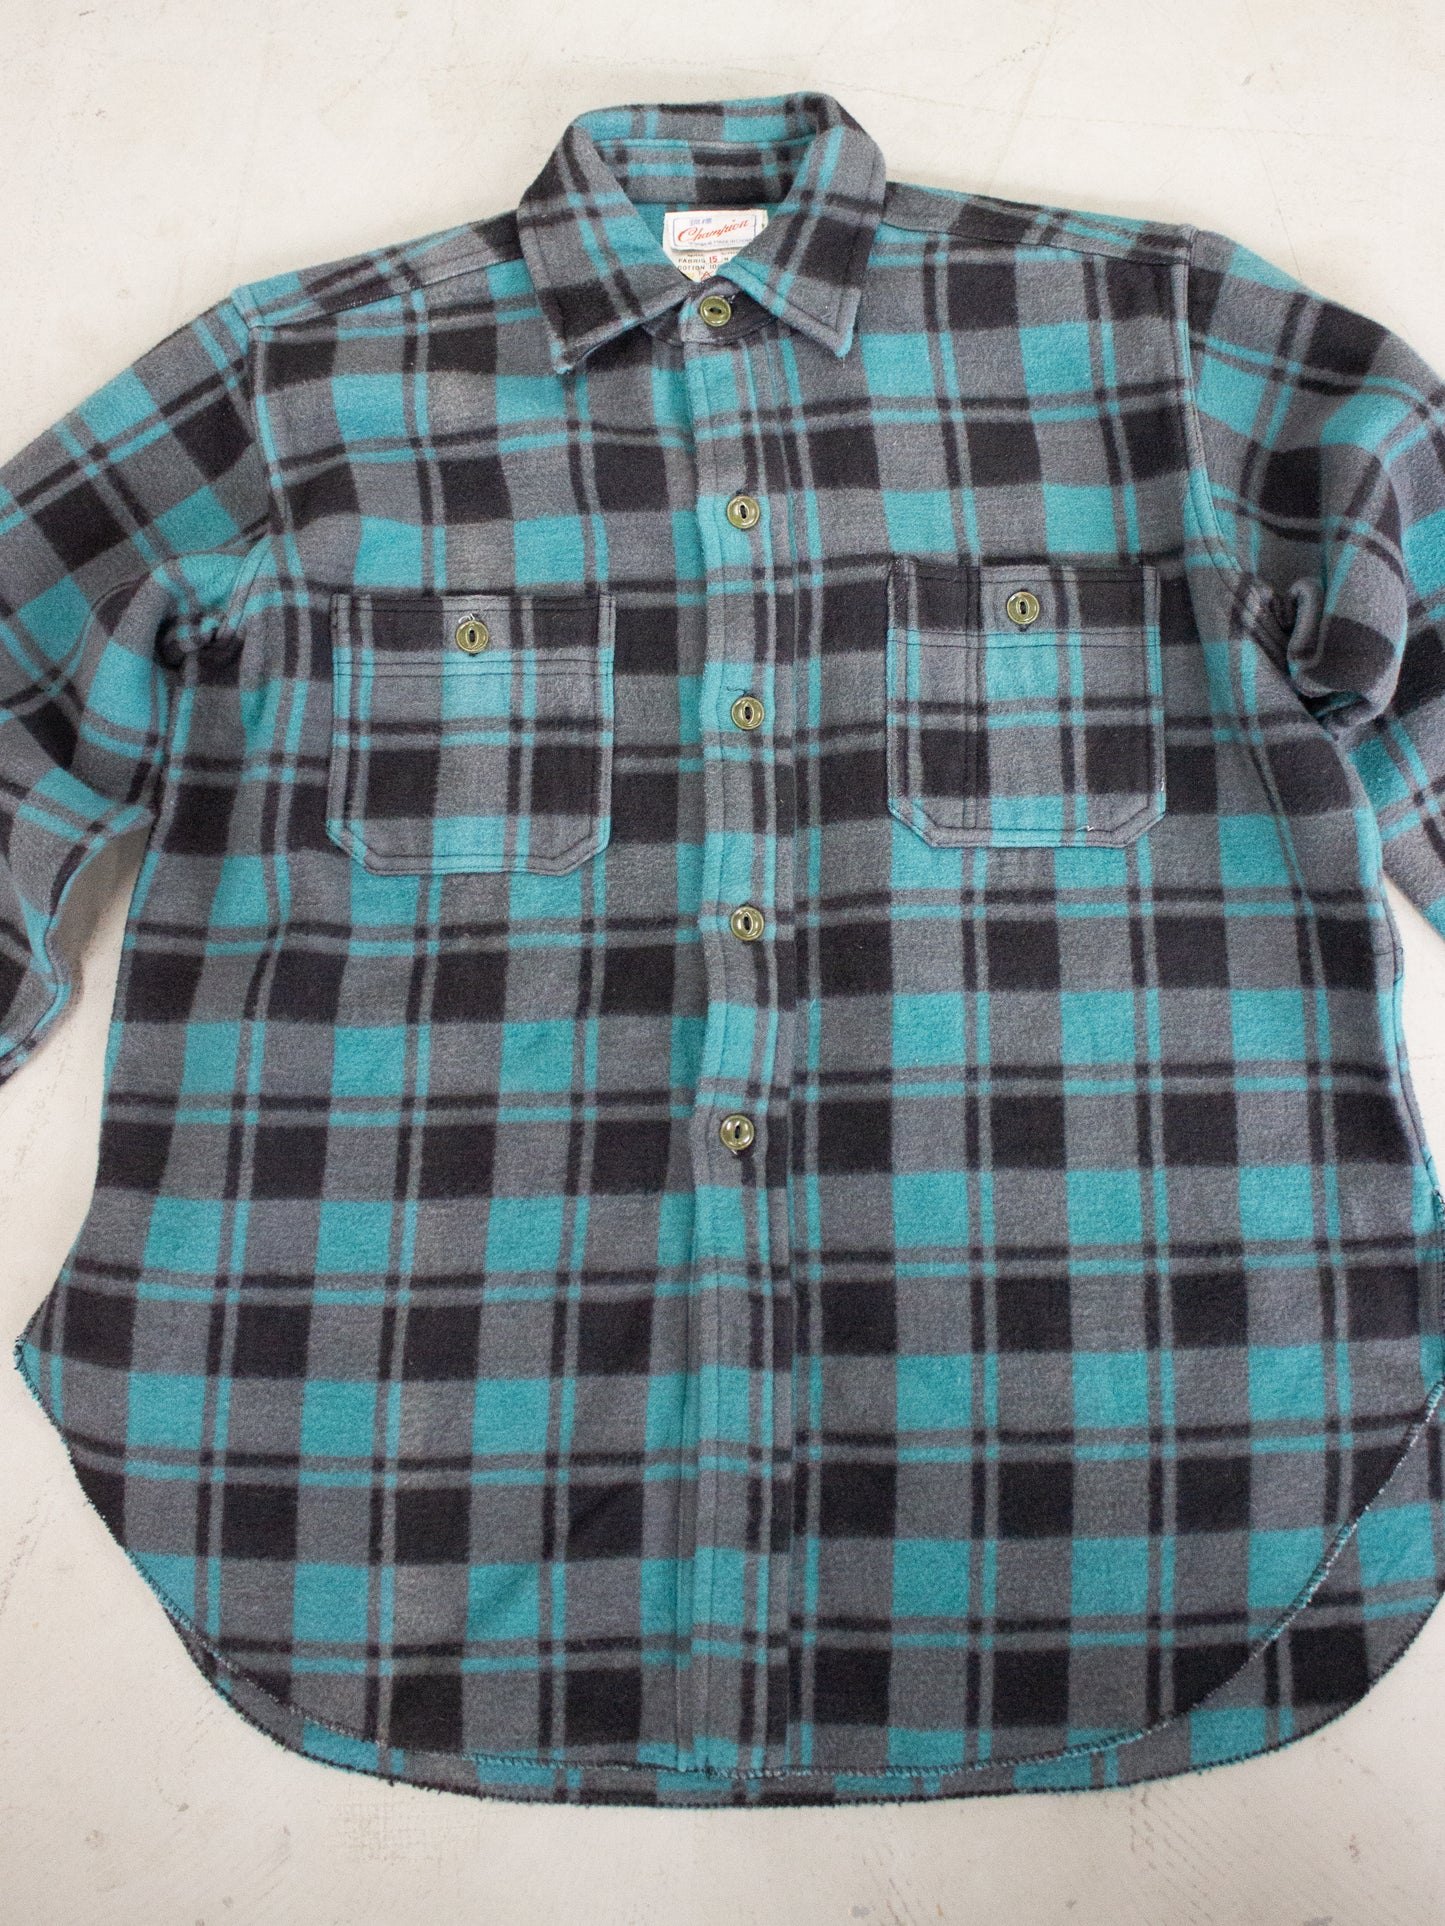 1970's Champion Plaid Flannel Cotton Shirt (Medium-Large)